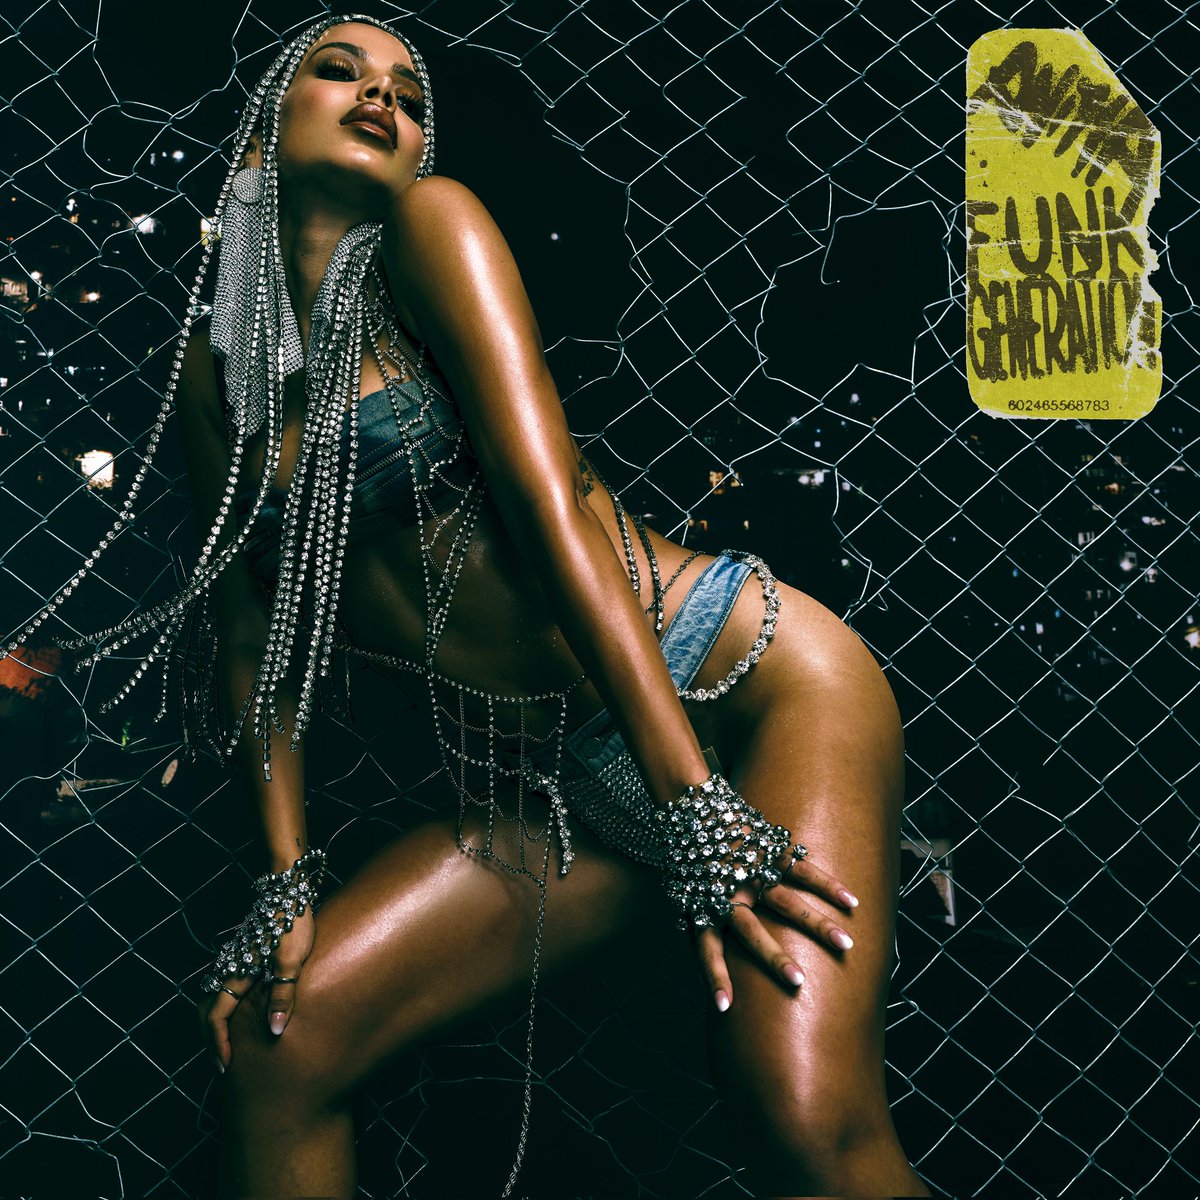 I’M A FUNKSTAR! 🇧🇷 Funk generation, April 26th. 🔥 Pre save now